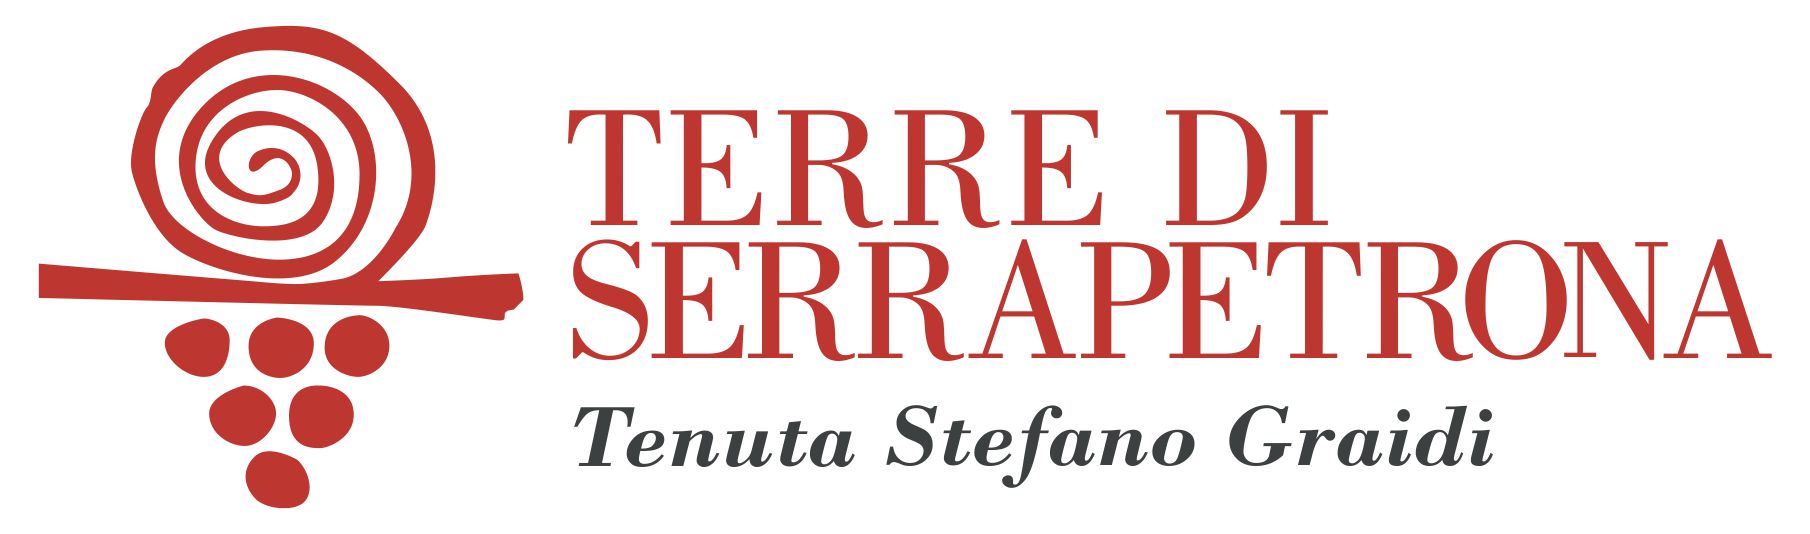 Terre di Serrapetrona | Tenuta Stefano Graidi